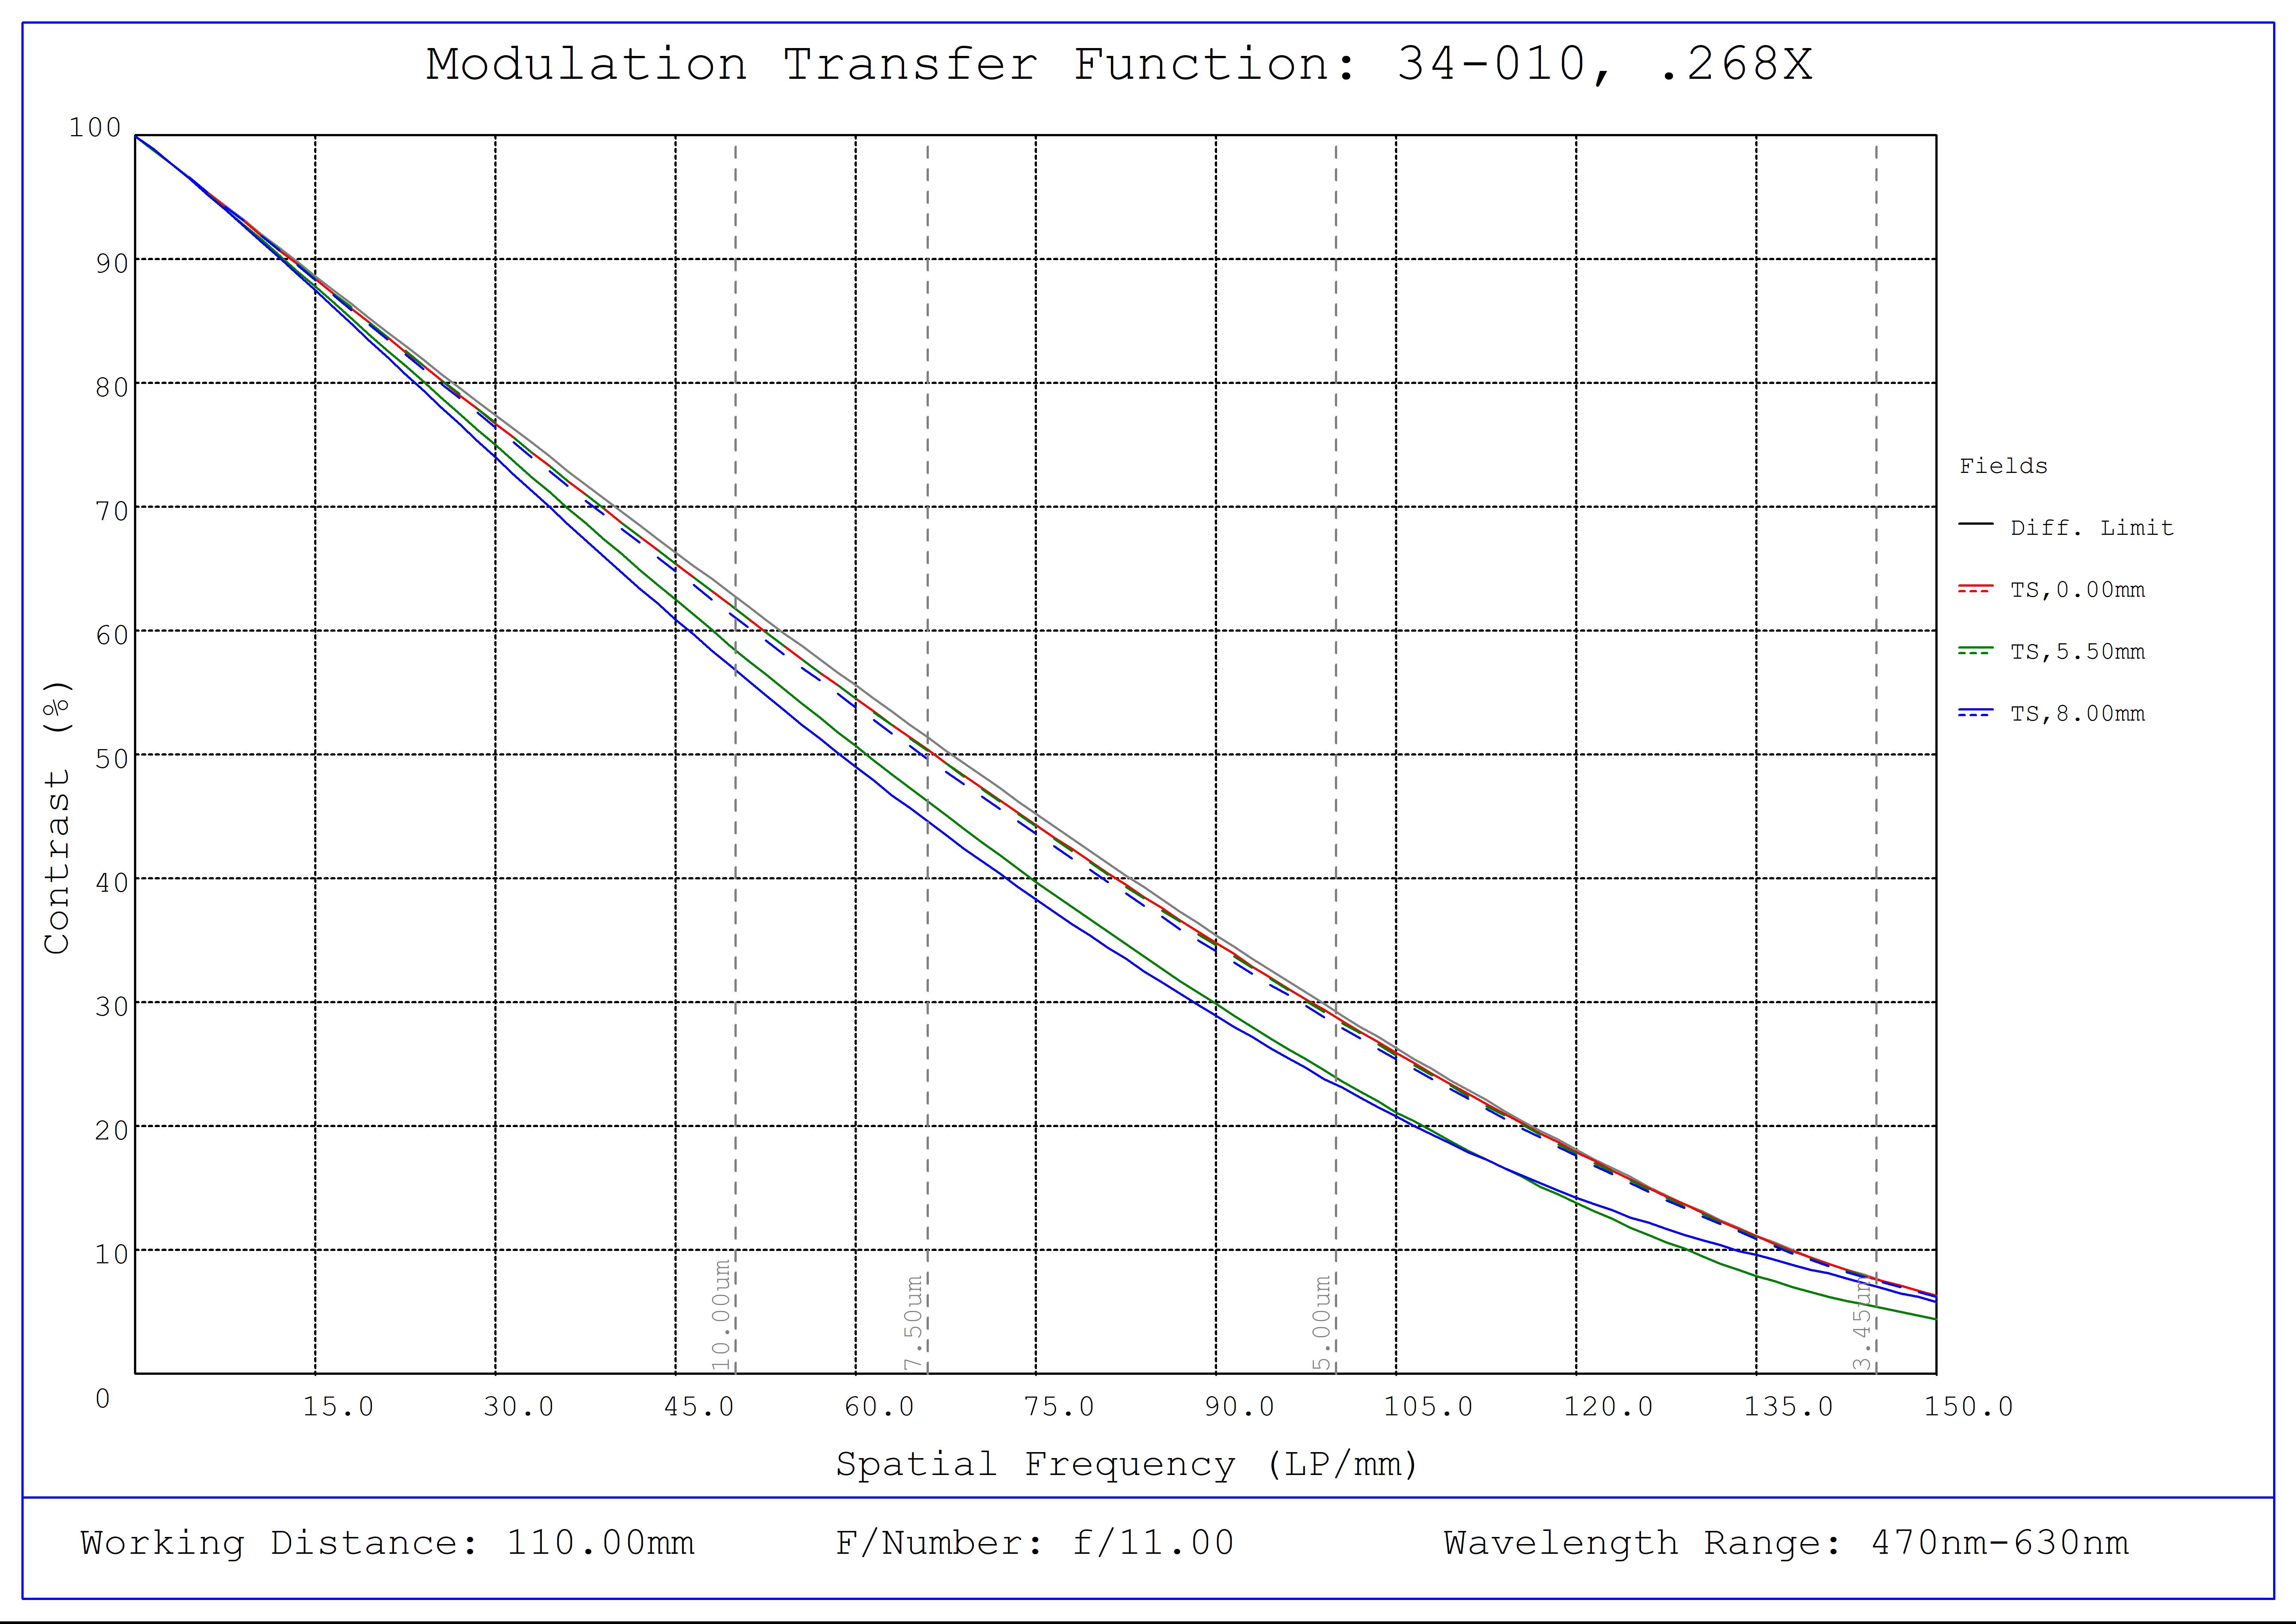 #34-010, 0.268X, 1" C-Mount TitanTL® Telecentric Lens, Modulated Transfer Function (MTF) Plot, 110mm Working Distance, f11